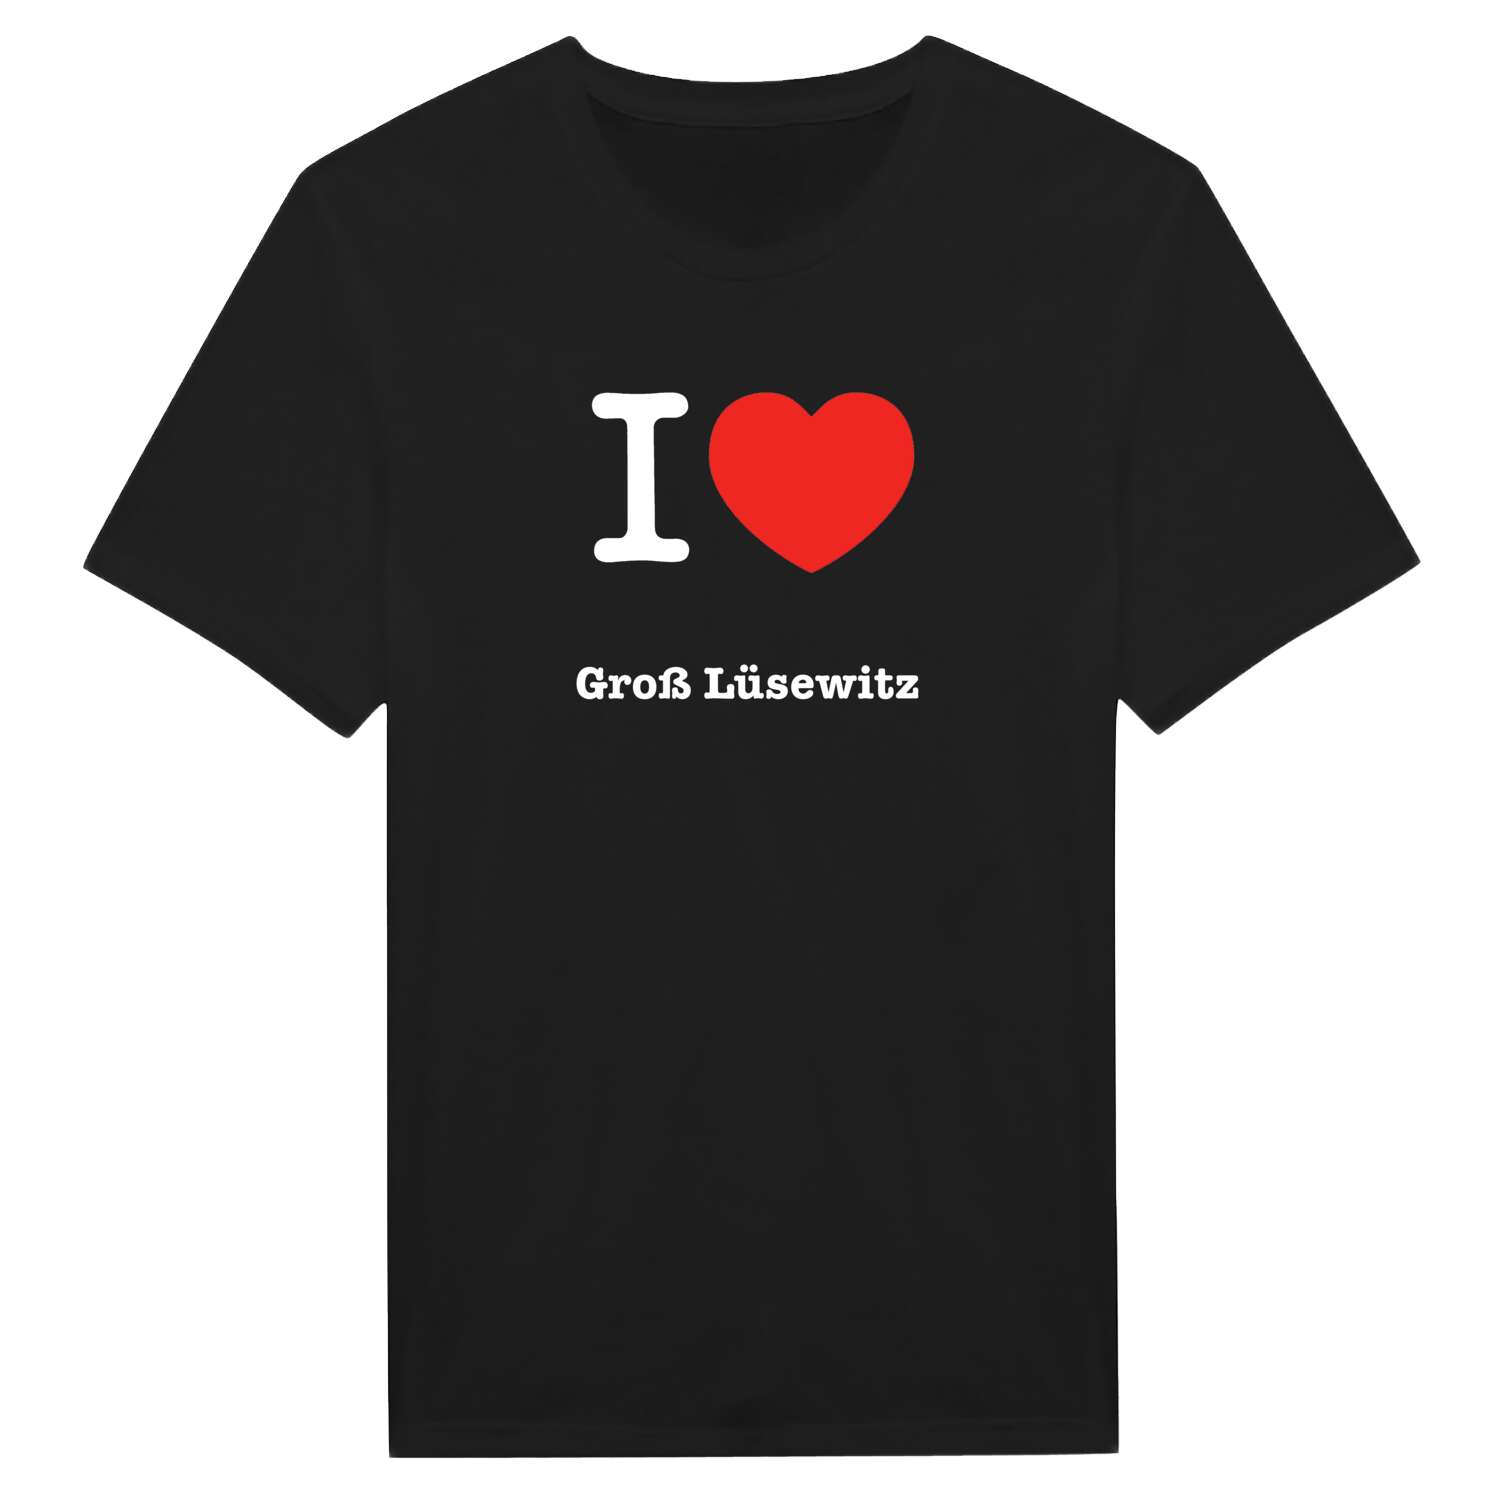 Groß Lüsewitz T-Shirt »I love«